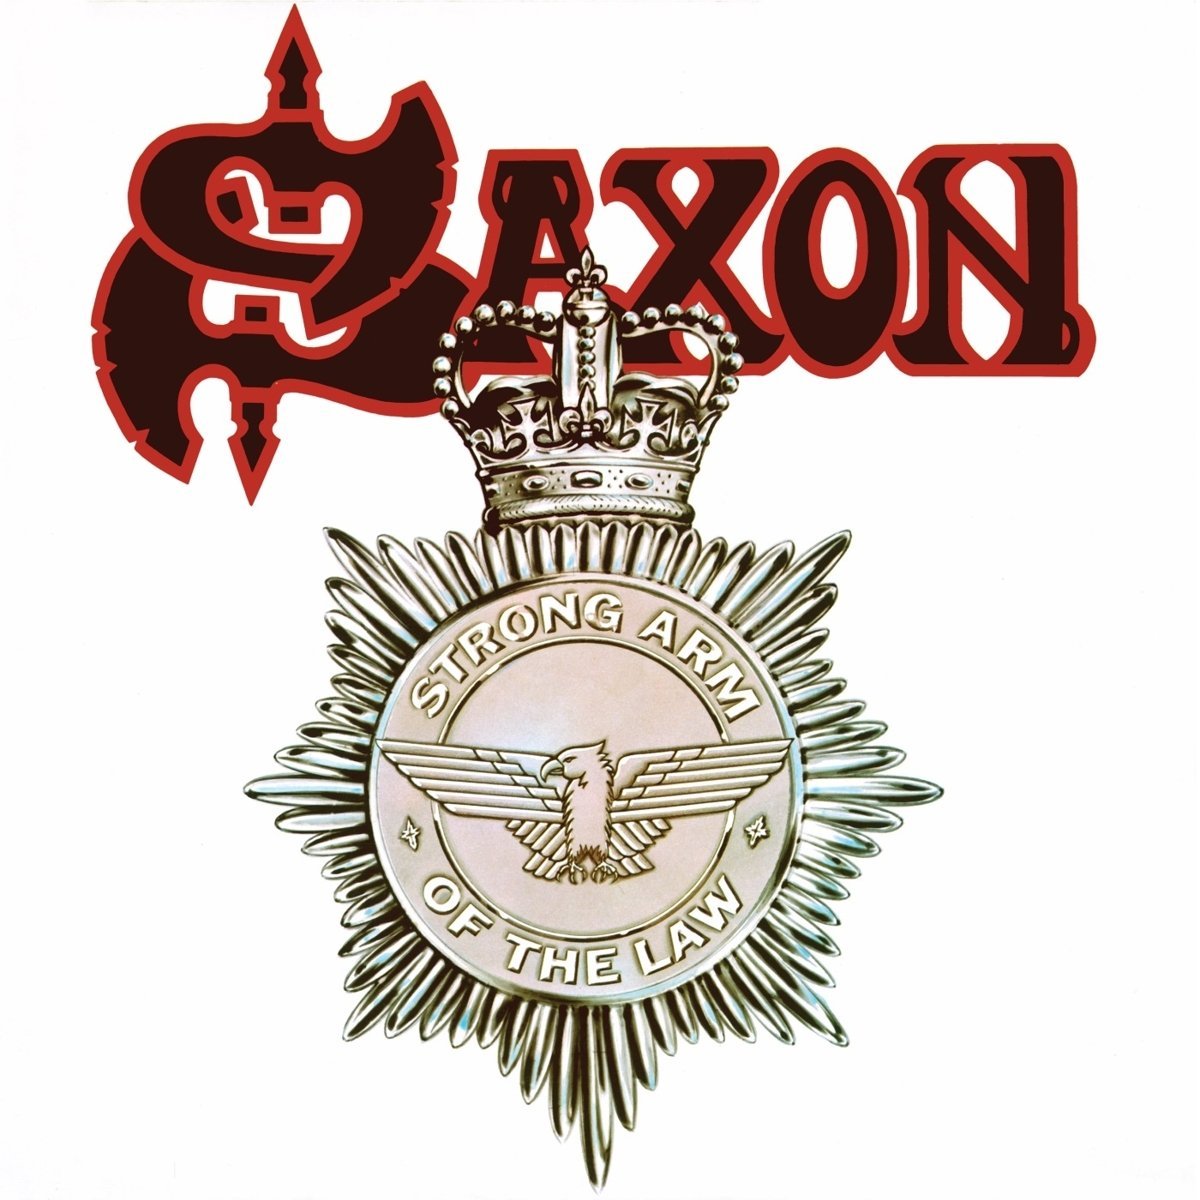 Saxon "Strong Arm Of The Law" White / Red / Black Splatter Vinyl